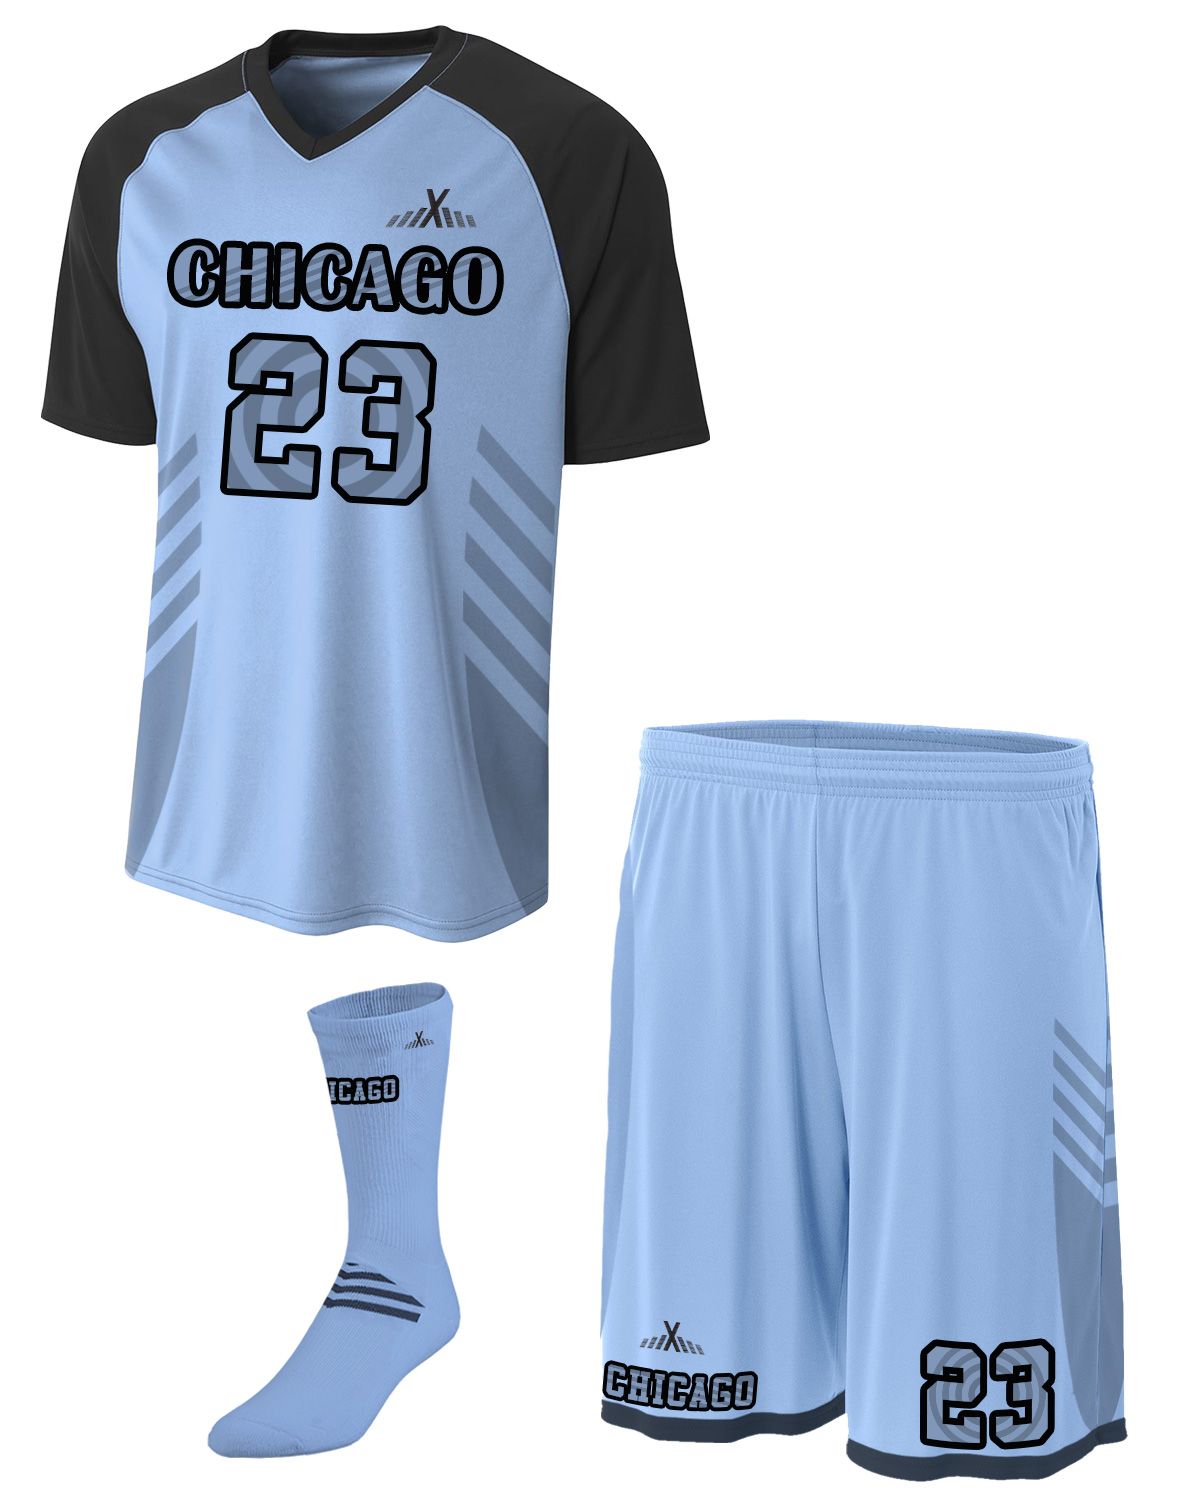 AthleisureX Full Custom Basketball Uniform (Jersey + shorts) - for Women